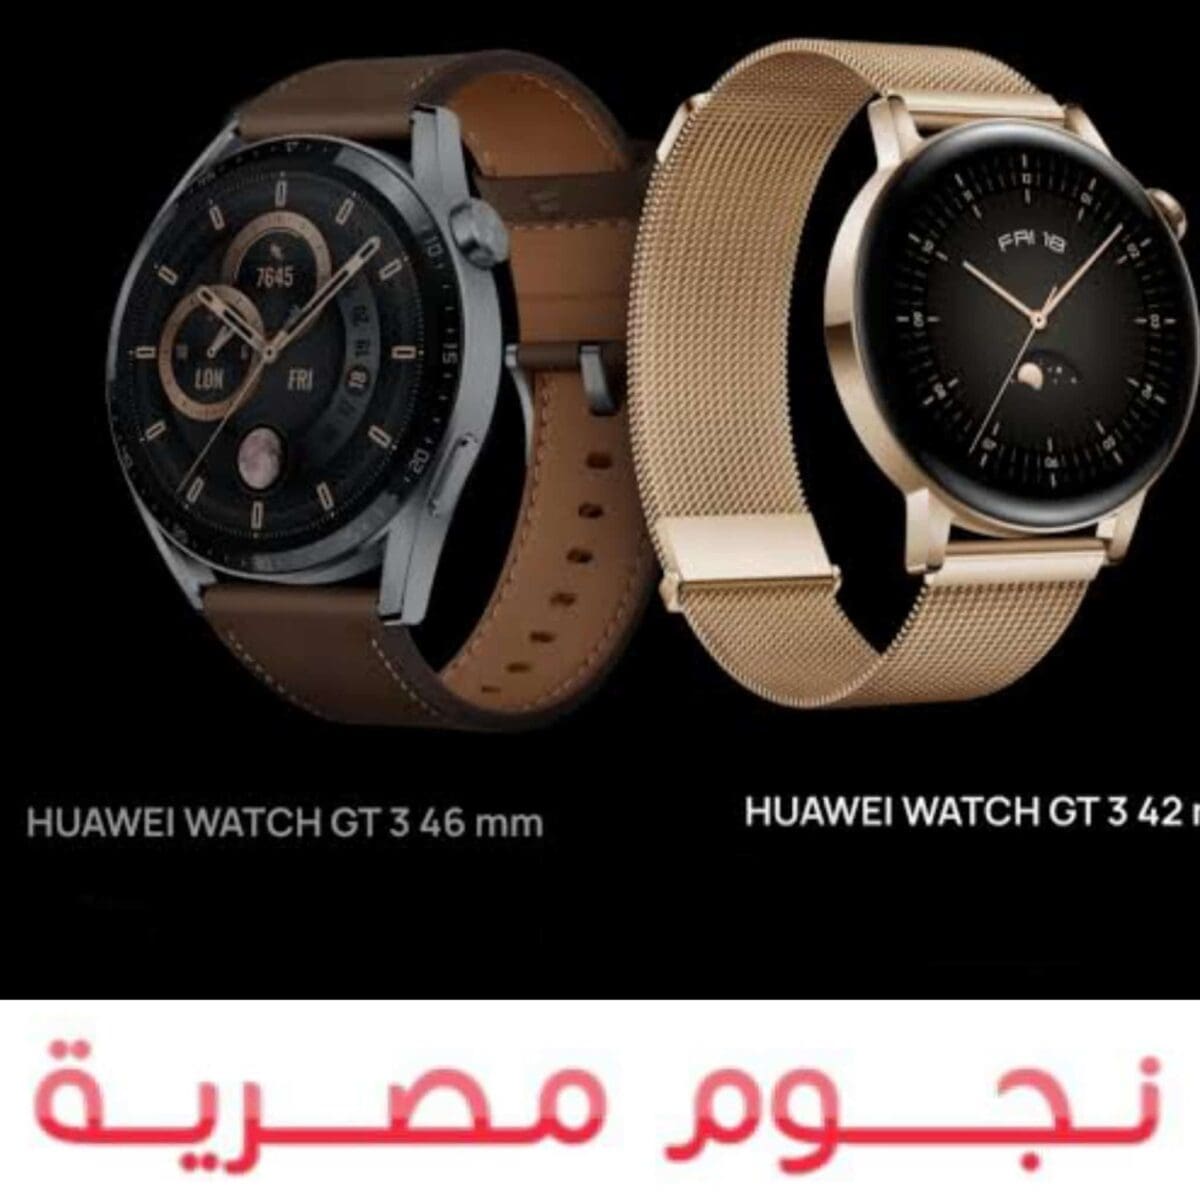 Huawei gt 3 характеристика. Huawei watch gt 3. Часы Huawei gt3. Huawei watch gt 3 Elite. Huawei watch gt 3 Active.